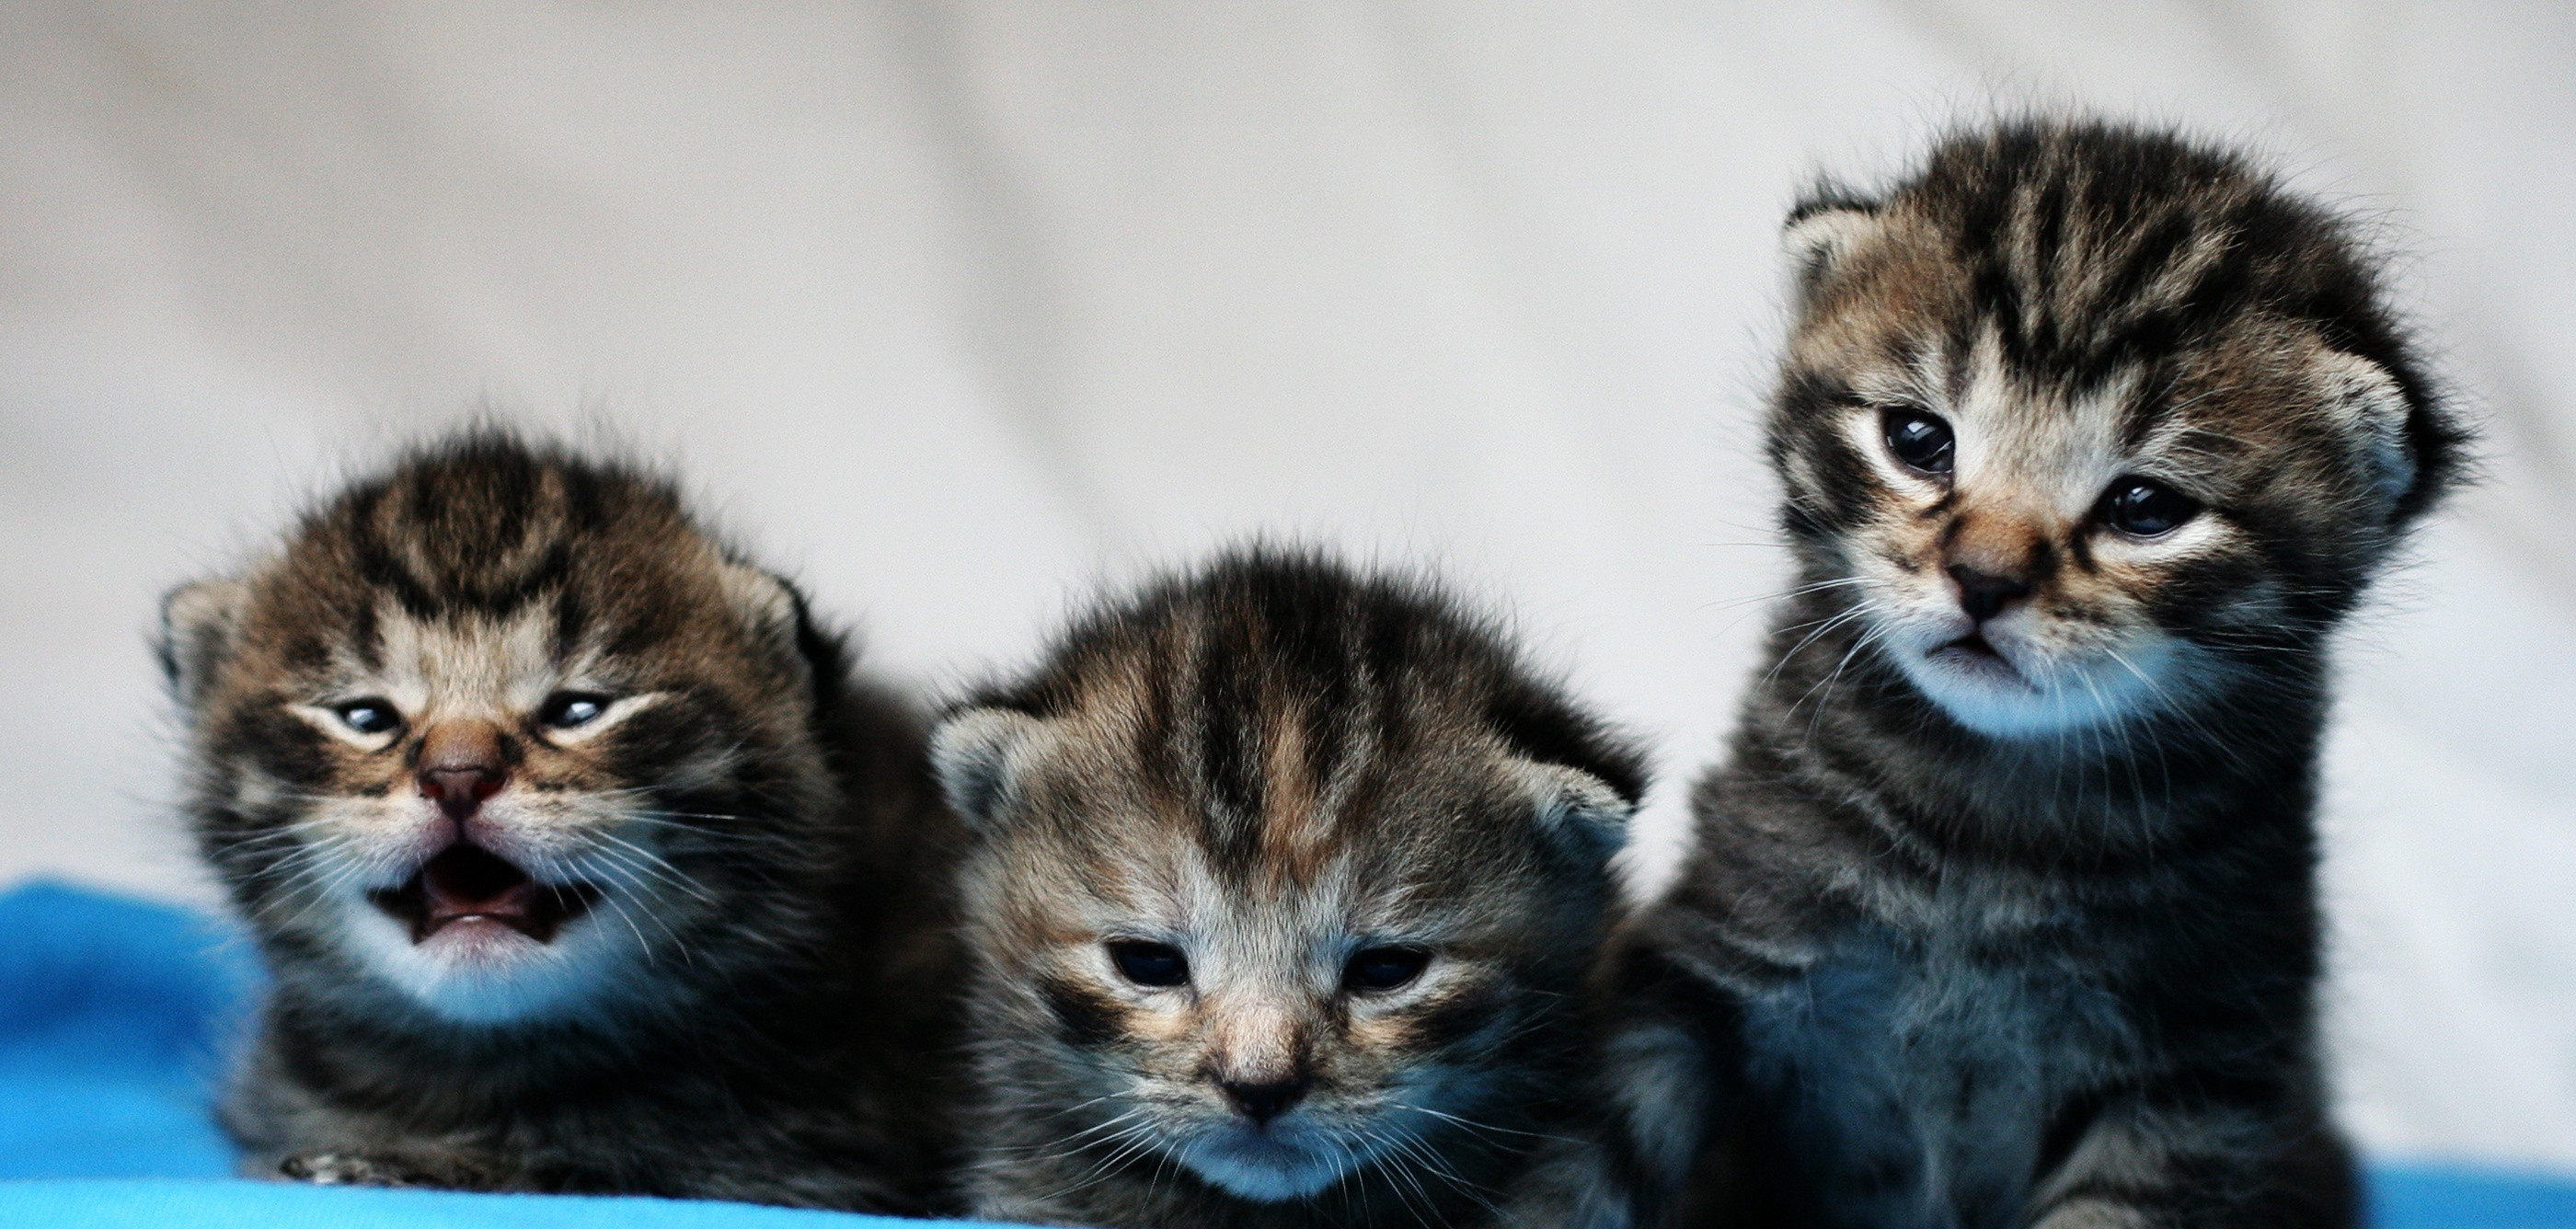 kittens by mathias-erhart, on Flickr